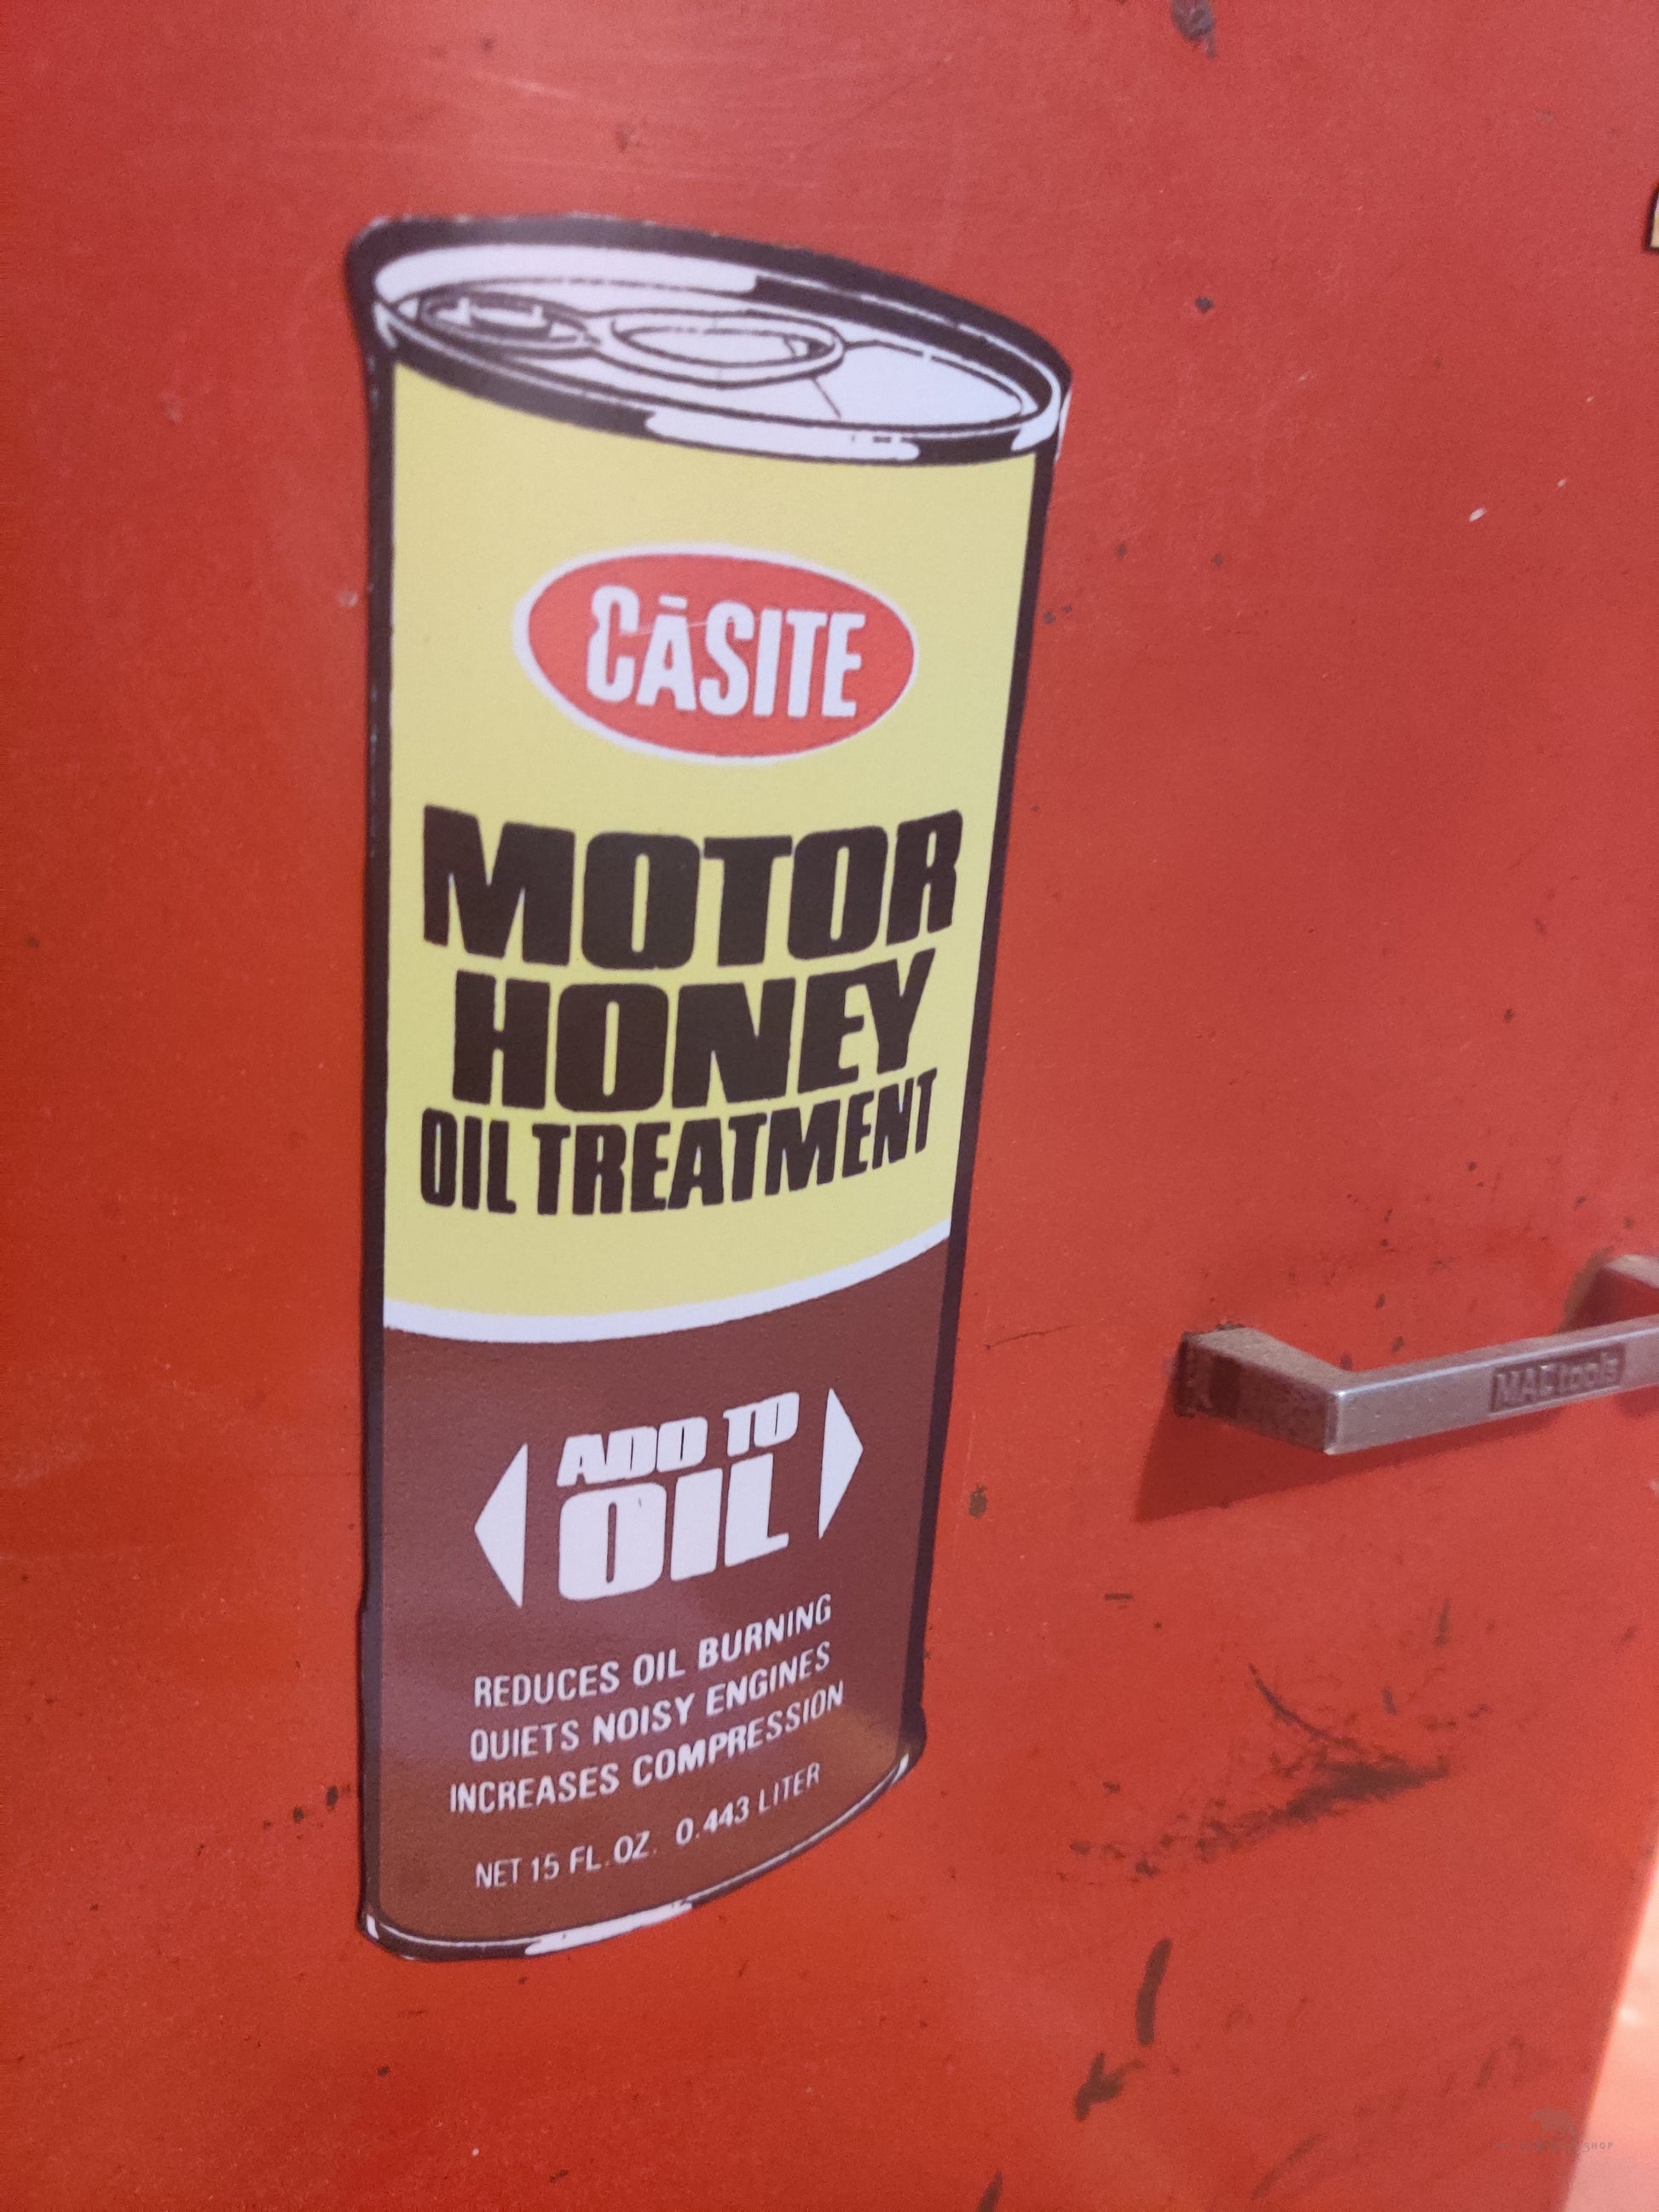 Casite Motor Honey Oil Treatment Magnet-The Sawmill Shop